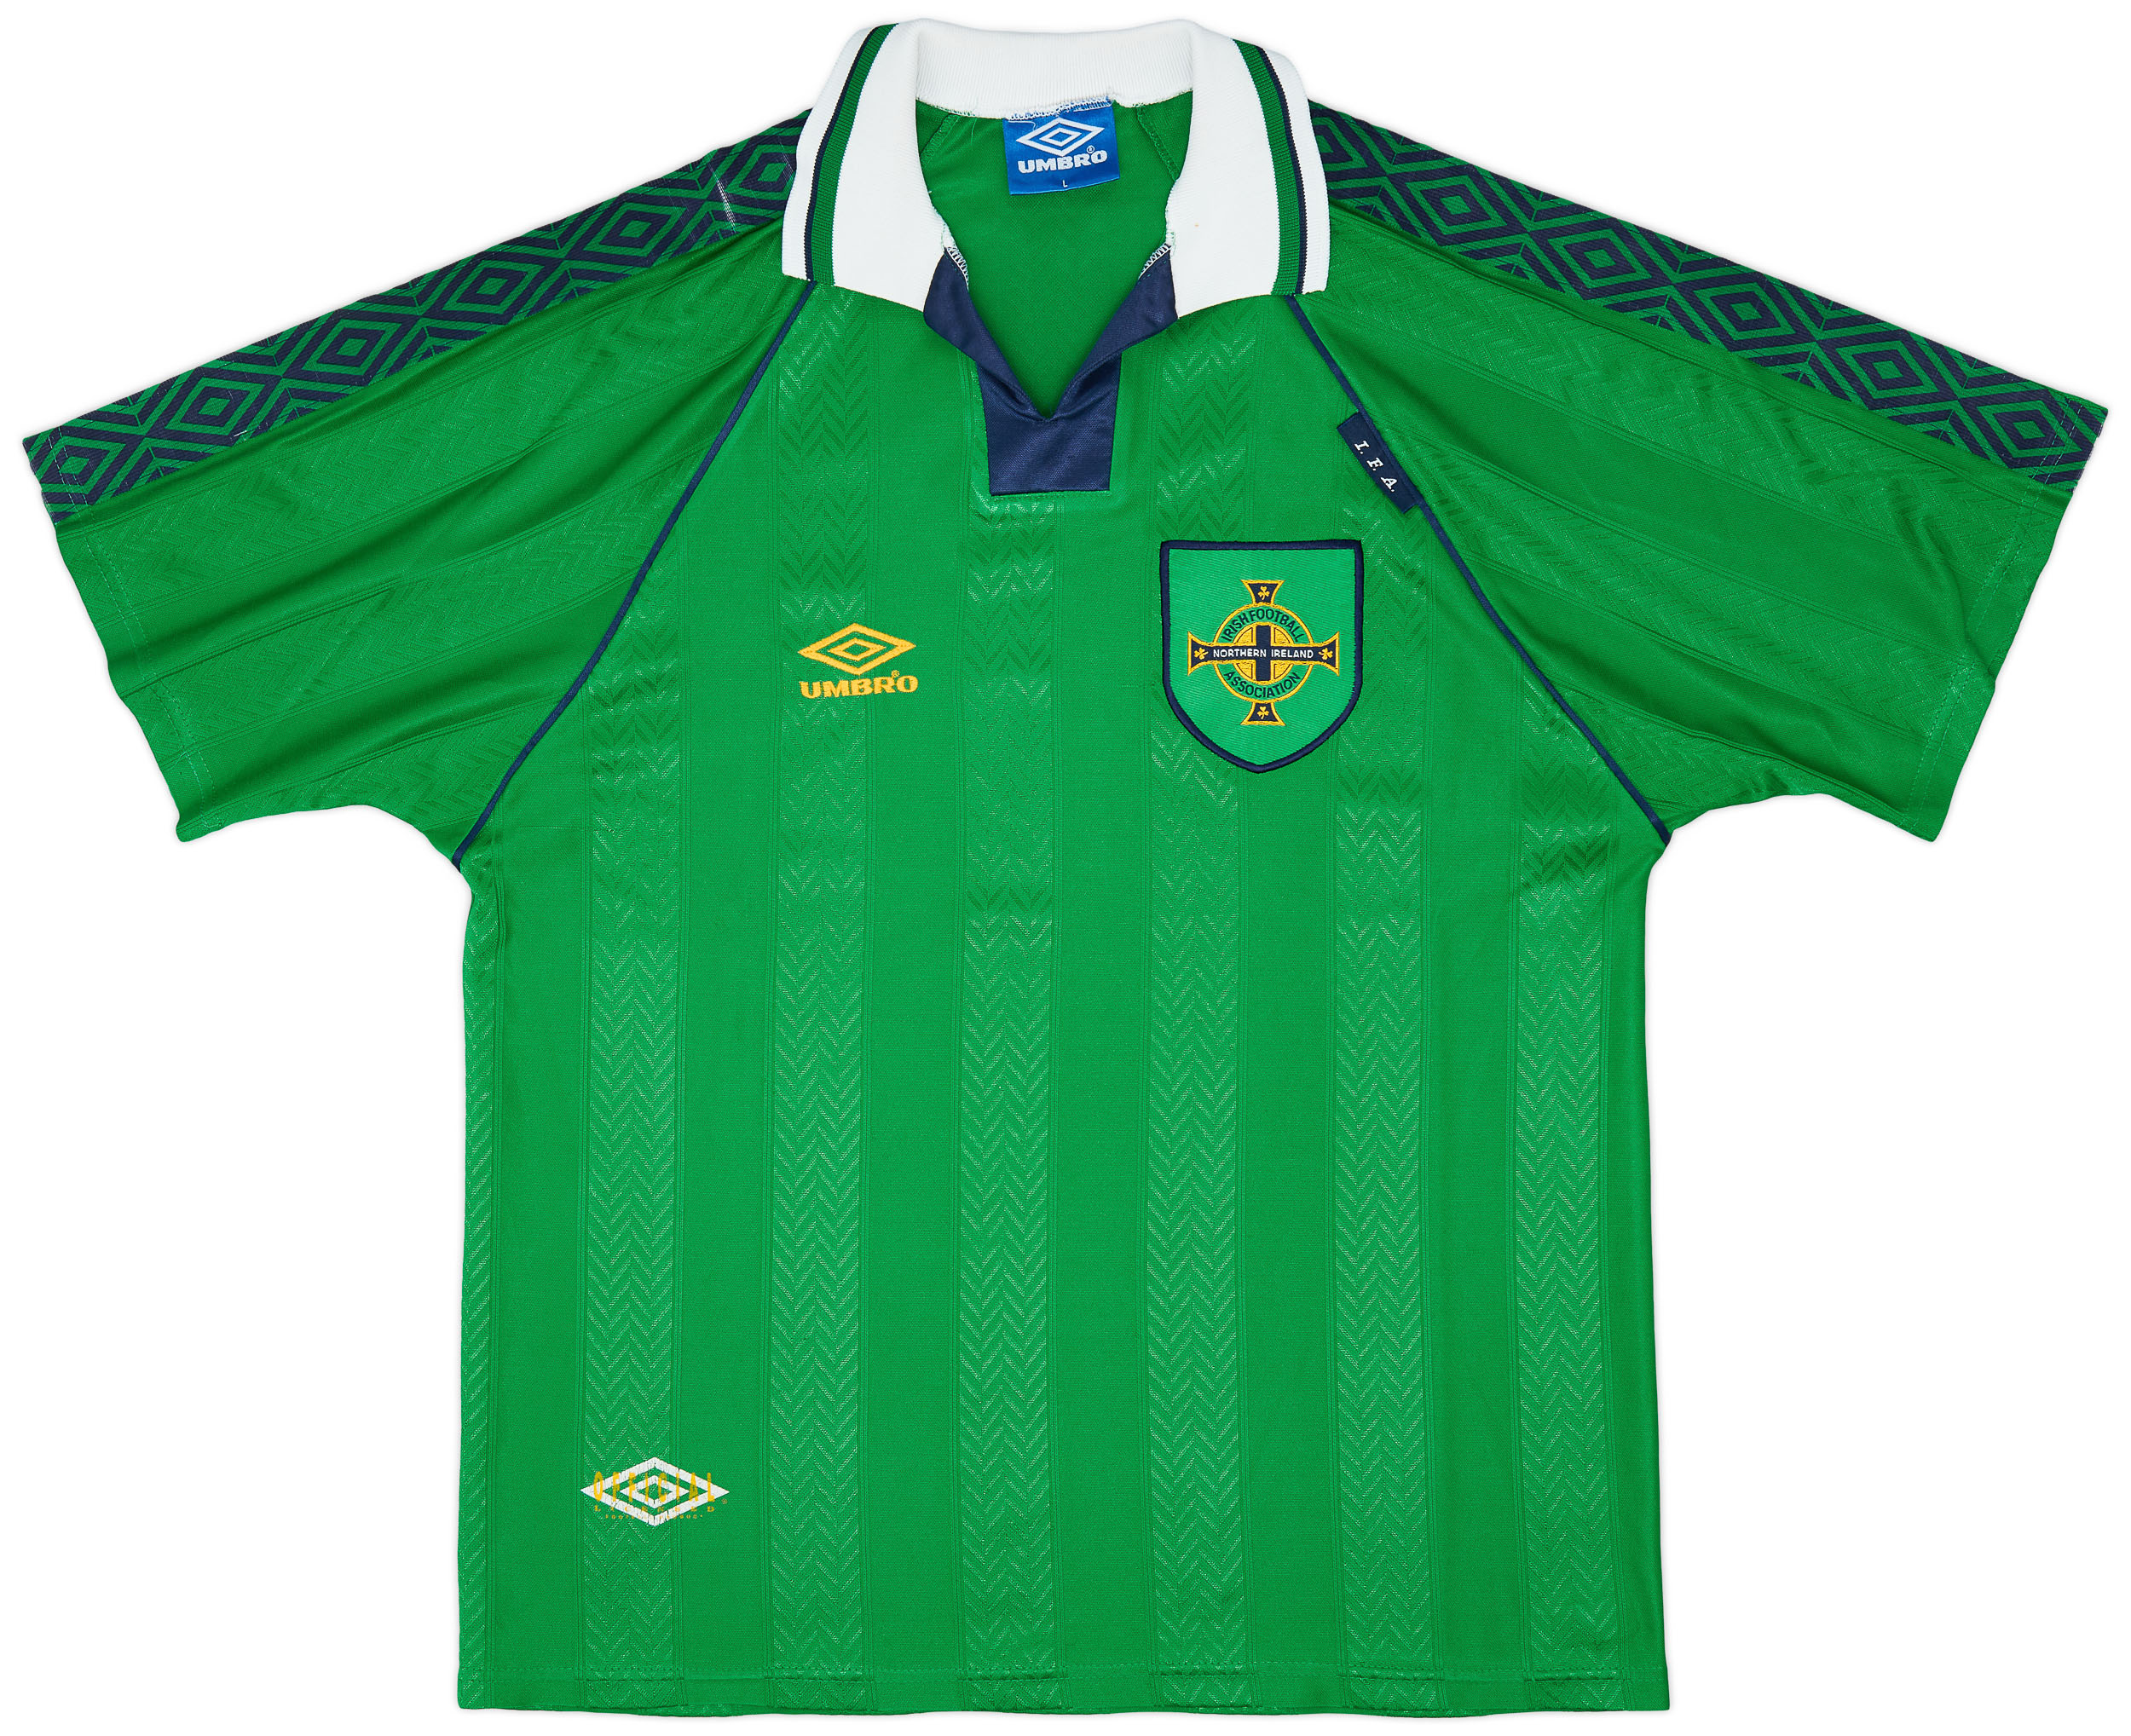 1994 Northern Ireland Prototype Home Shirt - 9/10 - ()